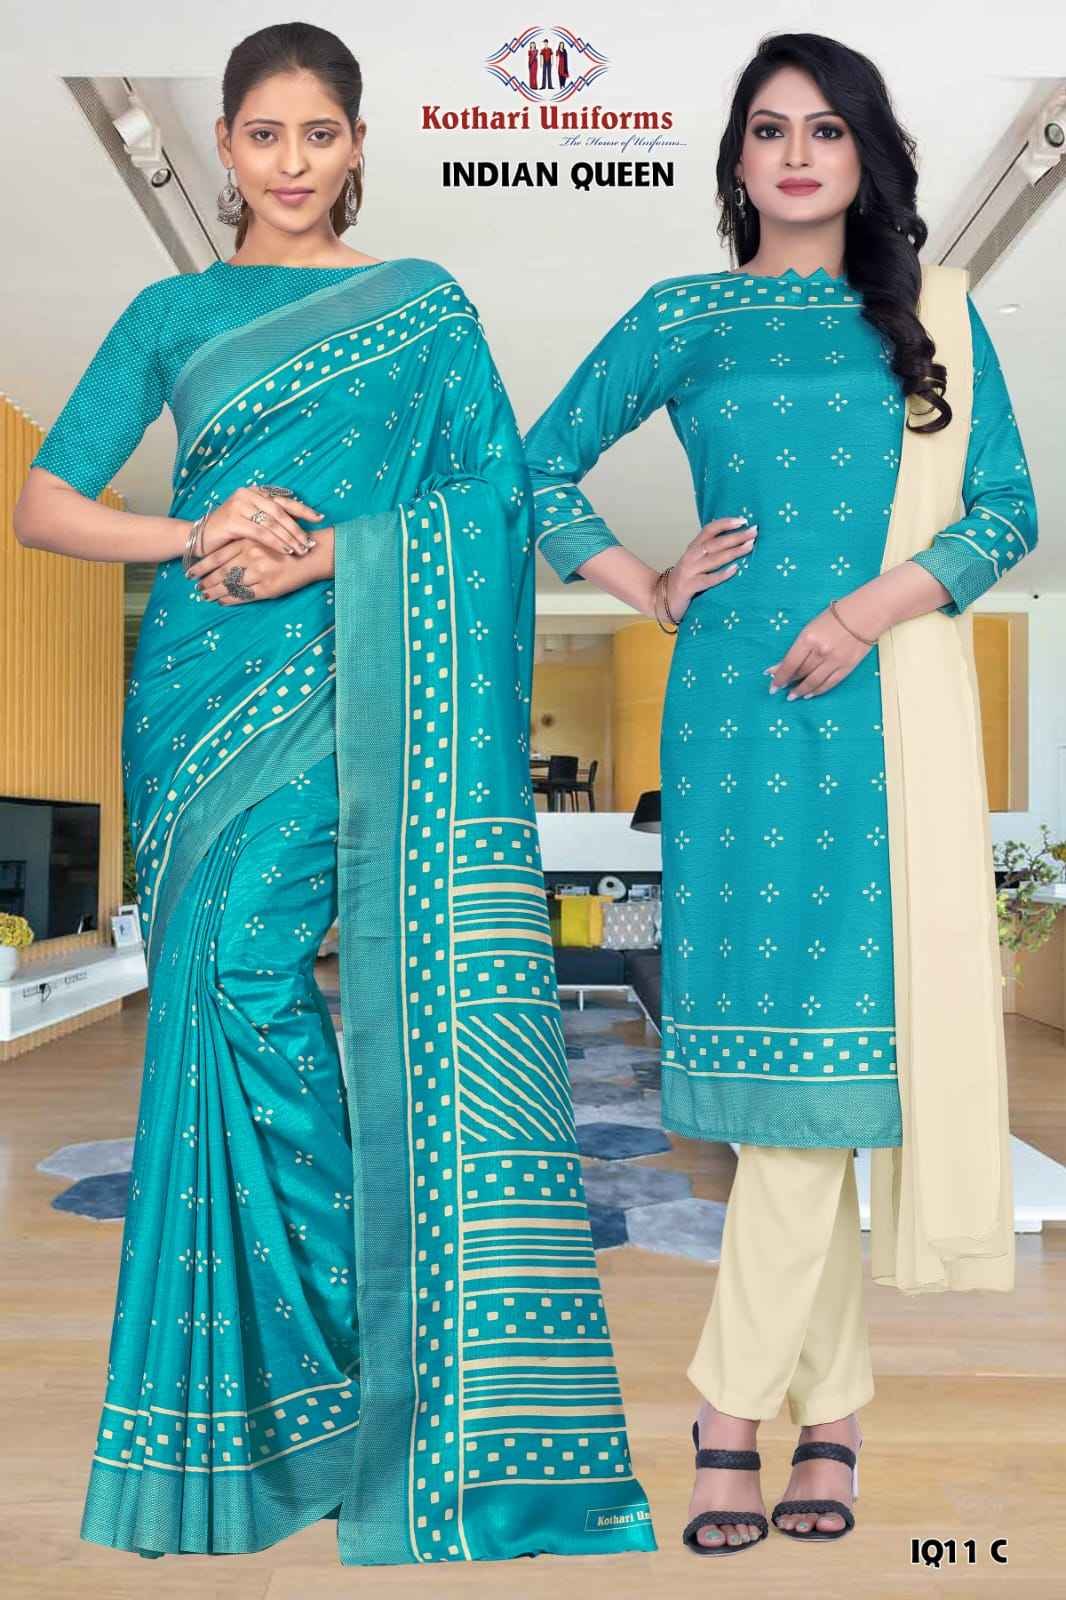 Light Sea Green Indian Queen - IQ11 C & CIQ11 C Women's Premium Non- Crepe  Printed Office Staff Uniform Saree Salwar Combo